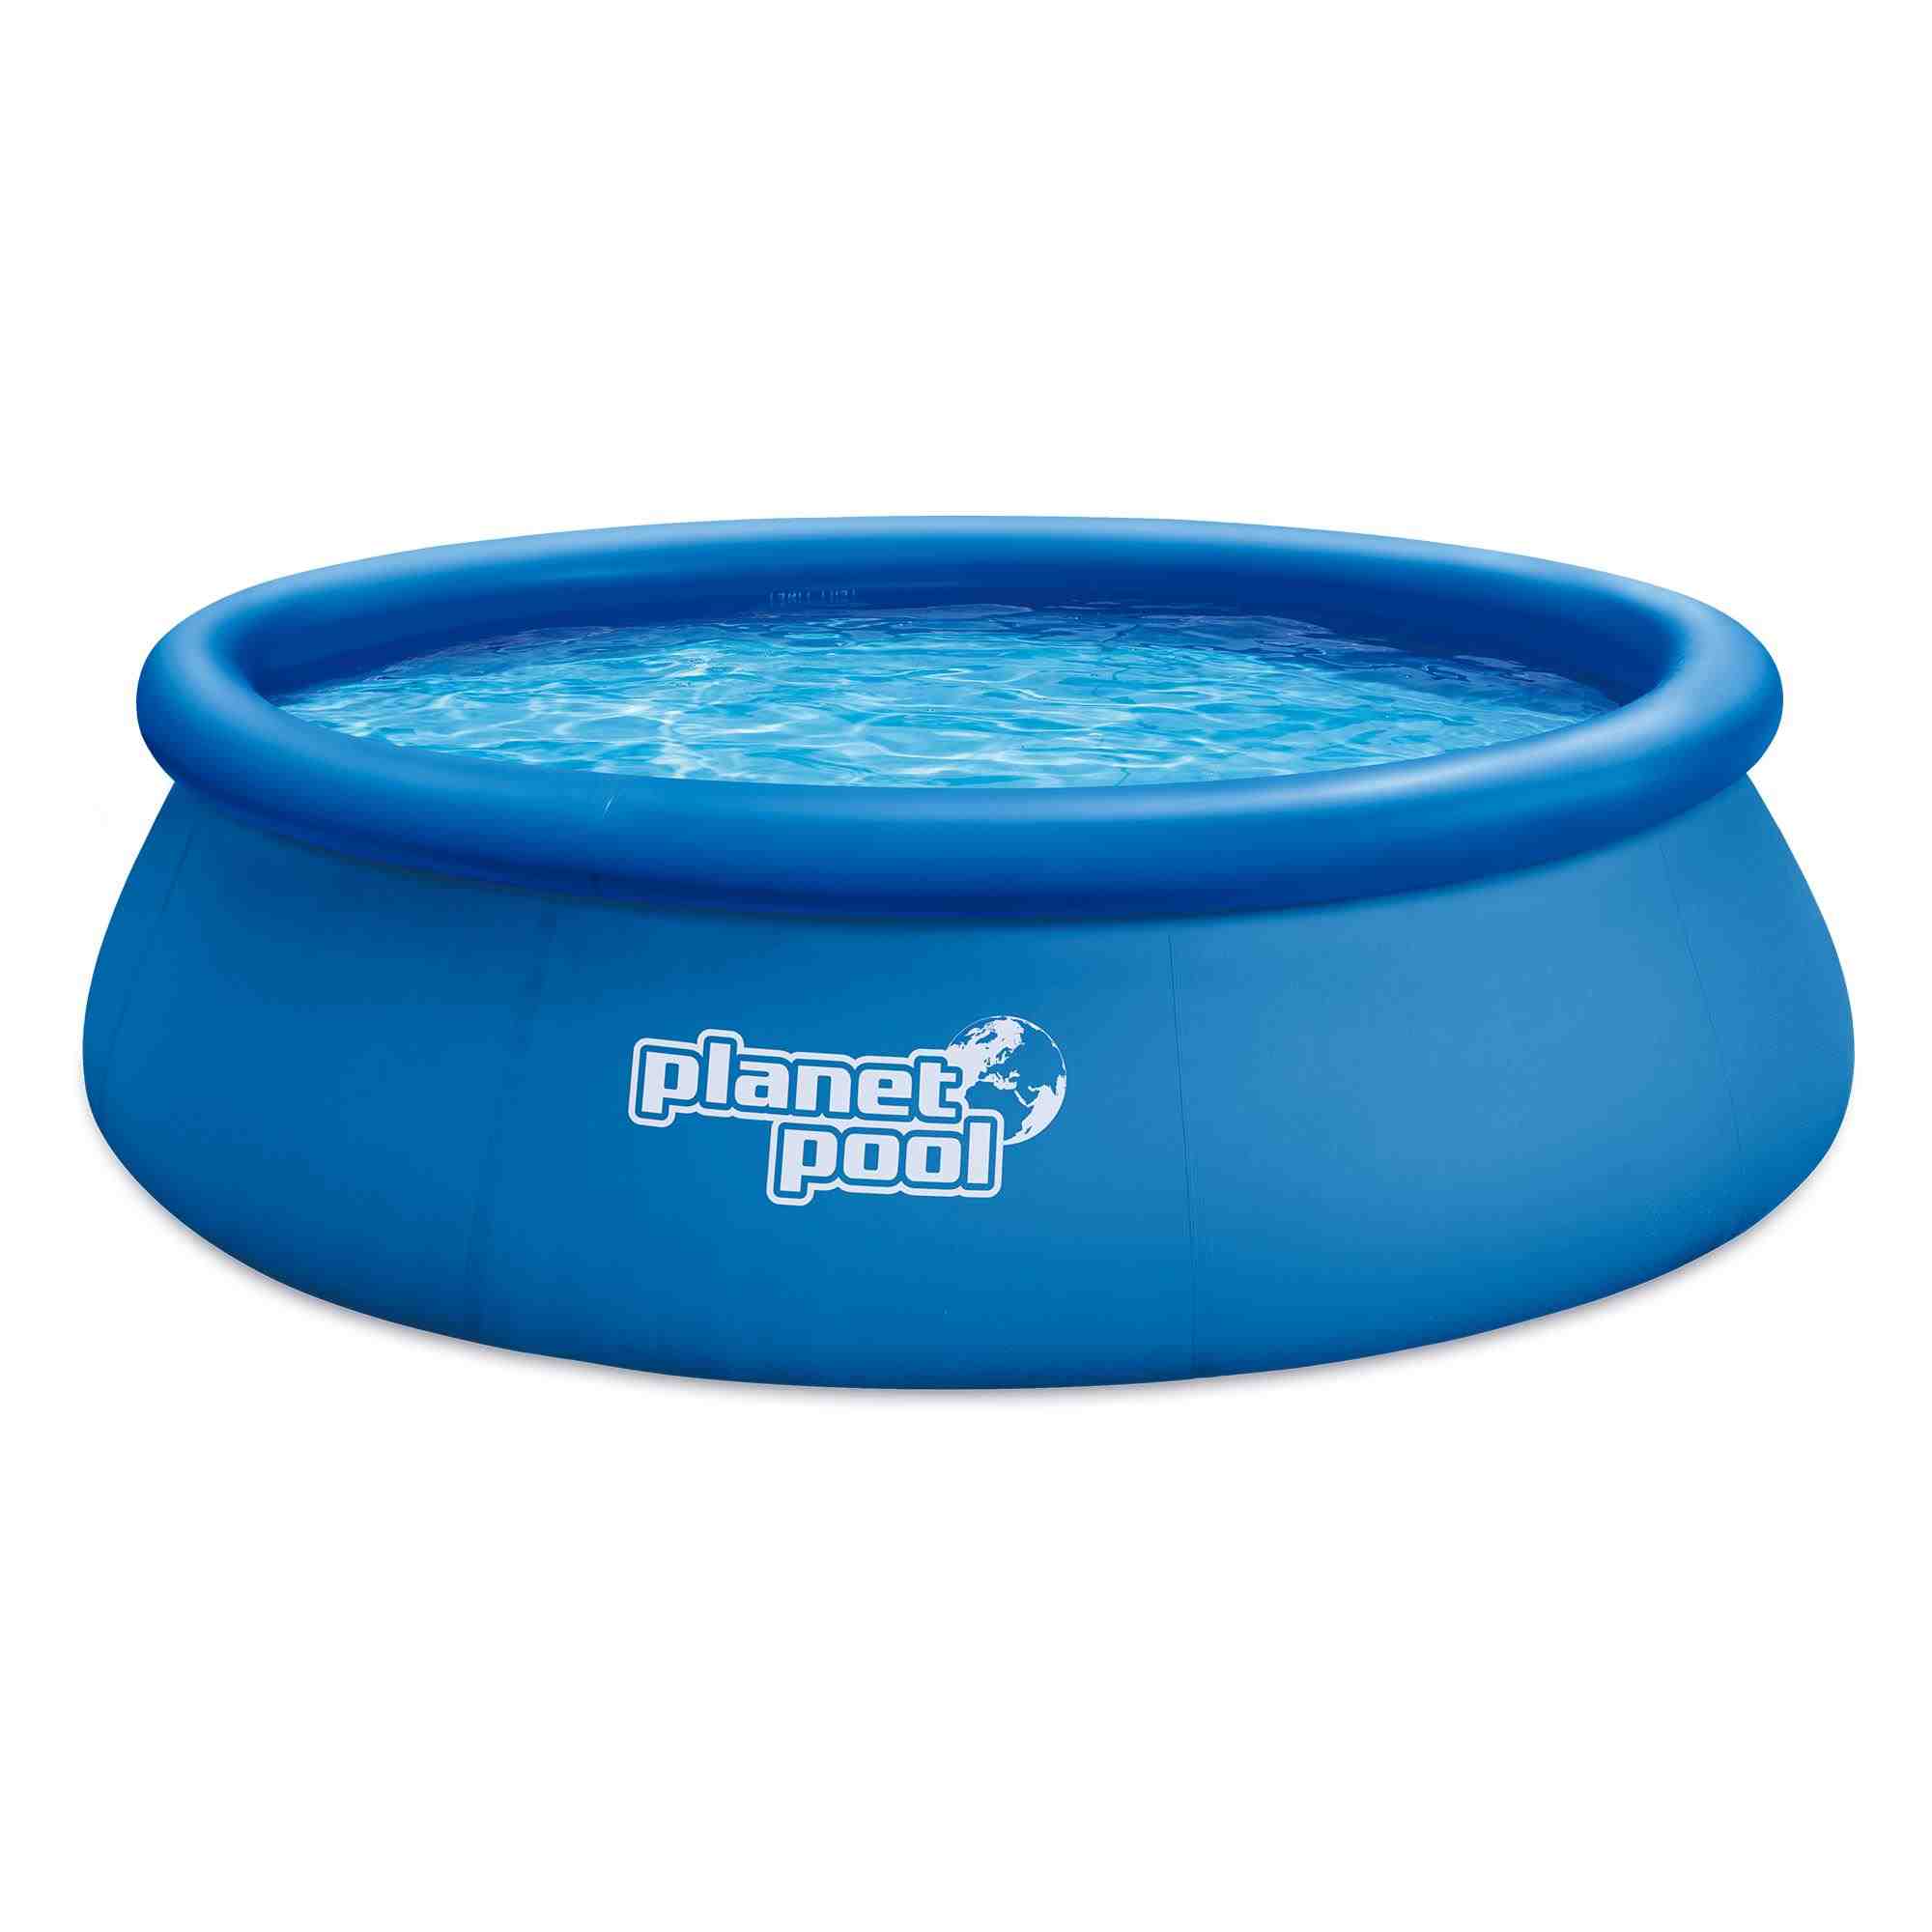 Bazén Planet Pool QUICK modrý - 366 x 91 cm0 